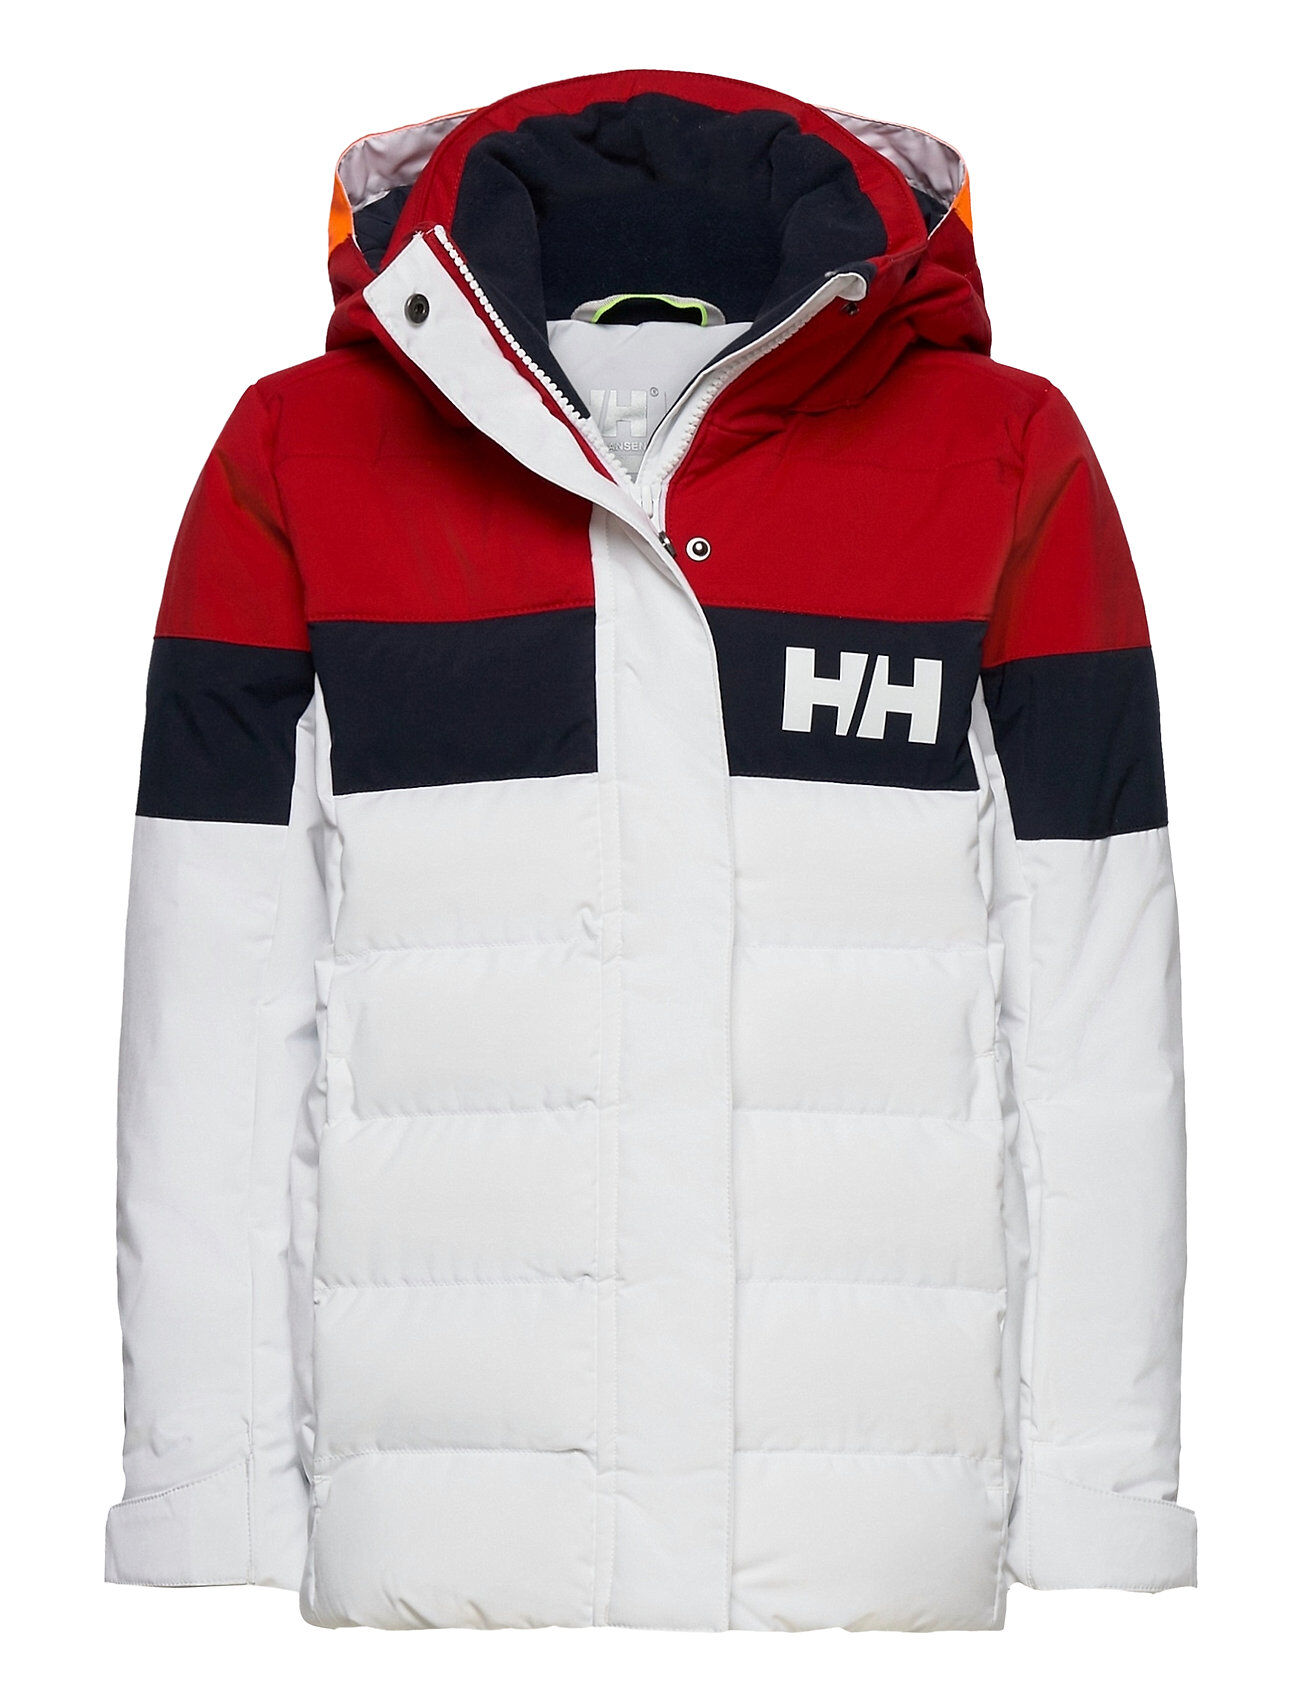 Helly Hansen Jr Diamond Jacket Outerwear Snow/ski Clothing Snow/ski Jacket Multi/mønstret Helly Hansen